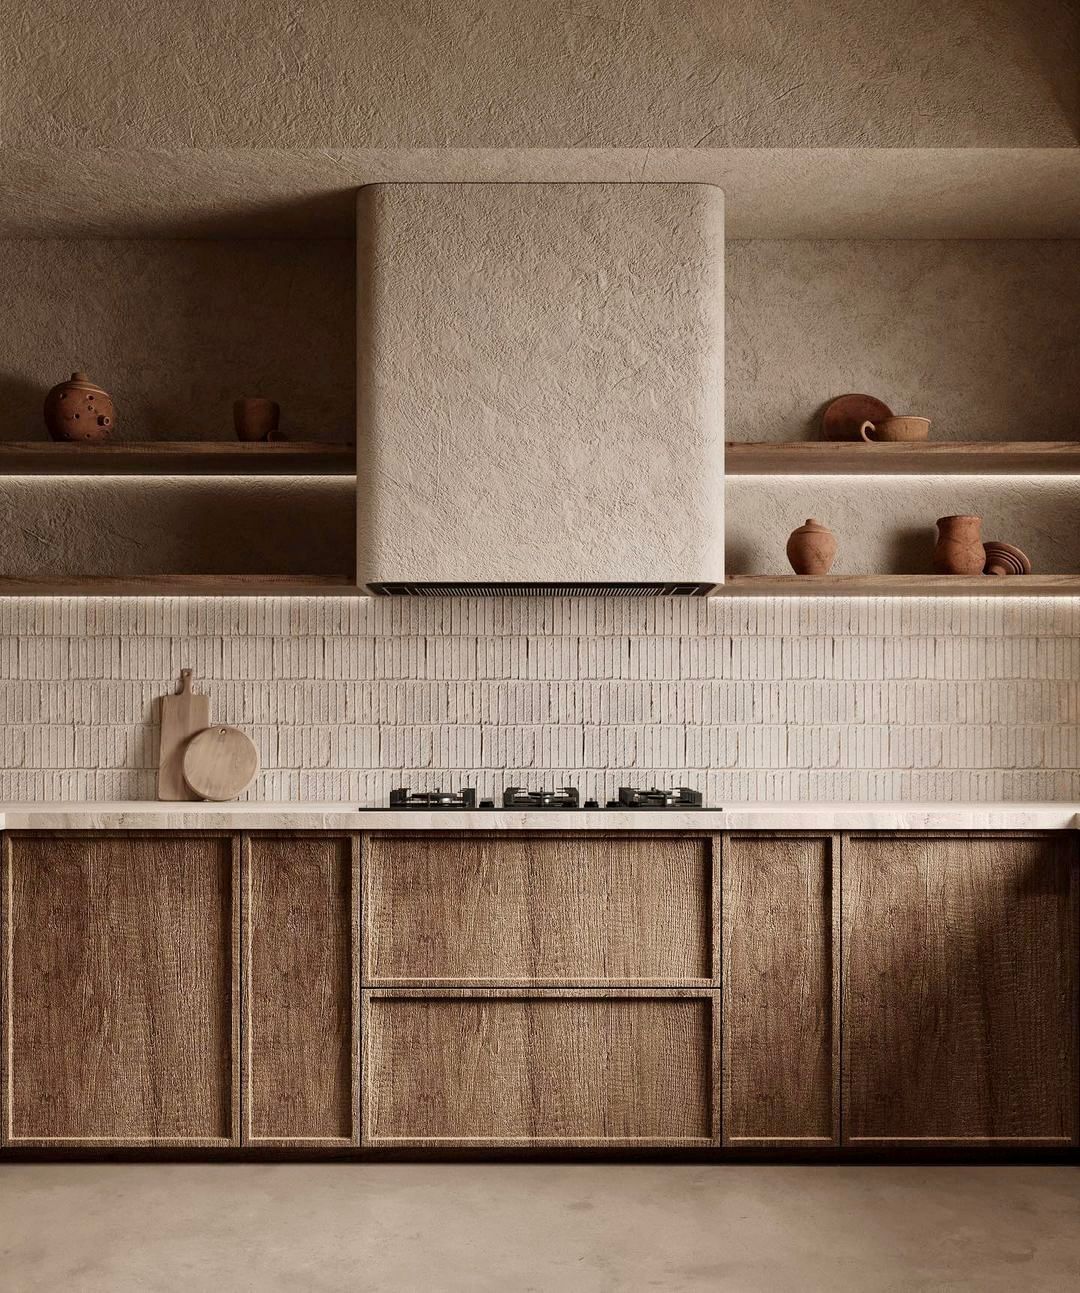 Transform Your Kitchen with these Stunning Interior Design Ideas